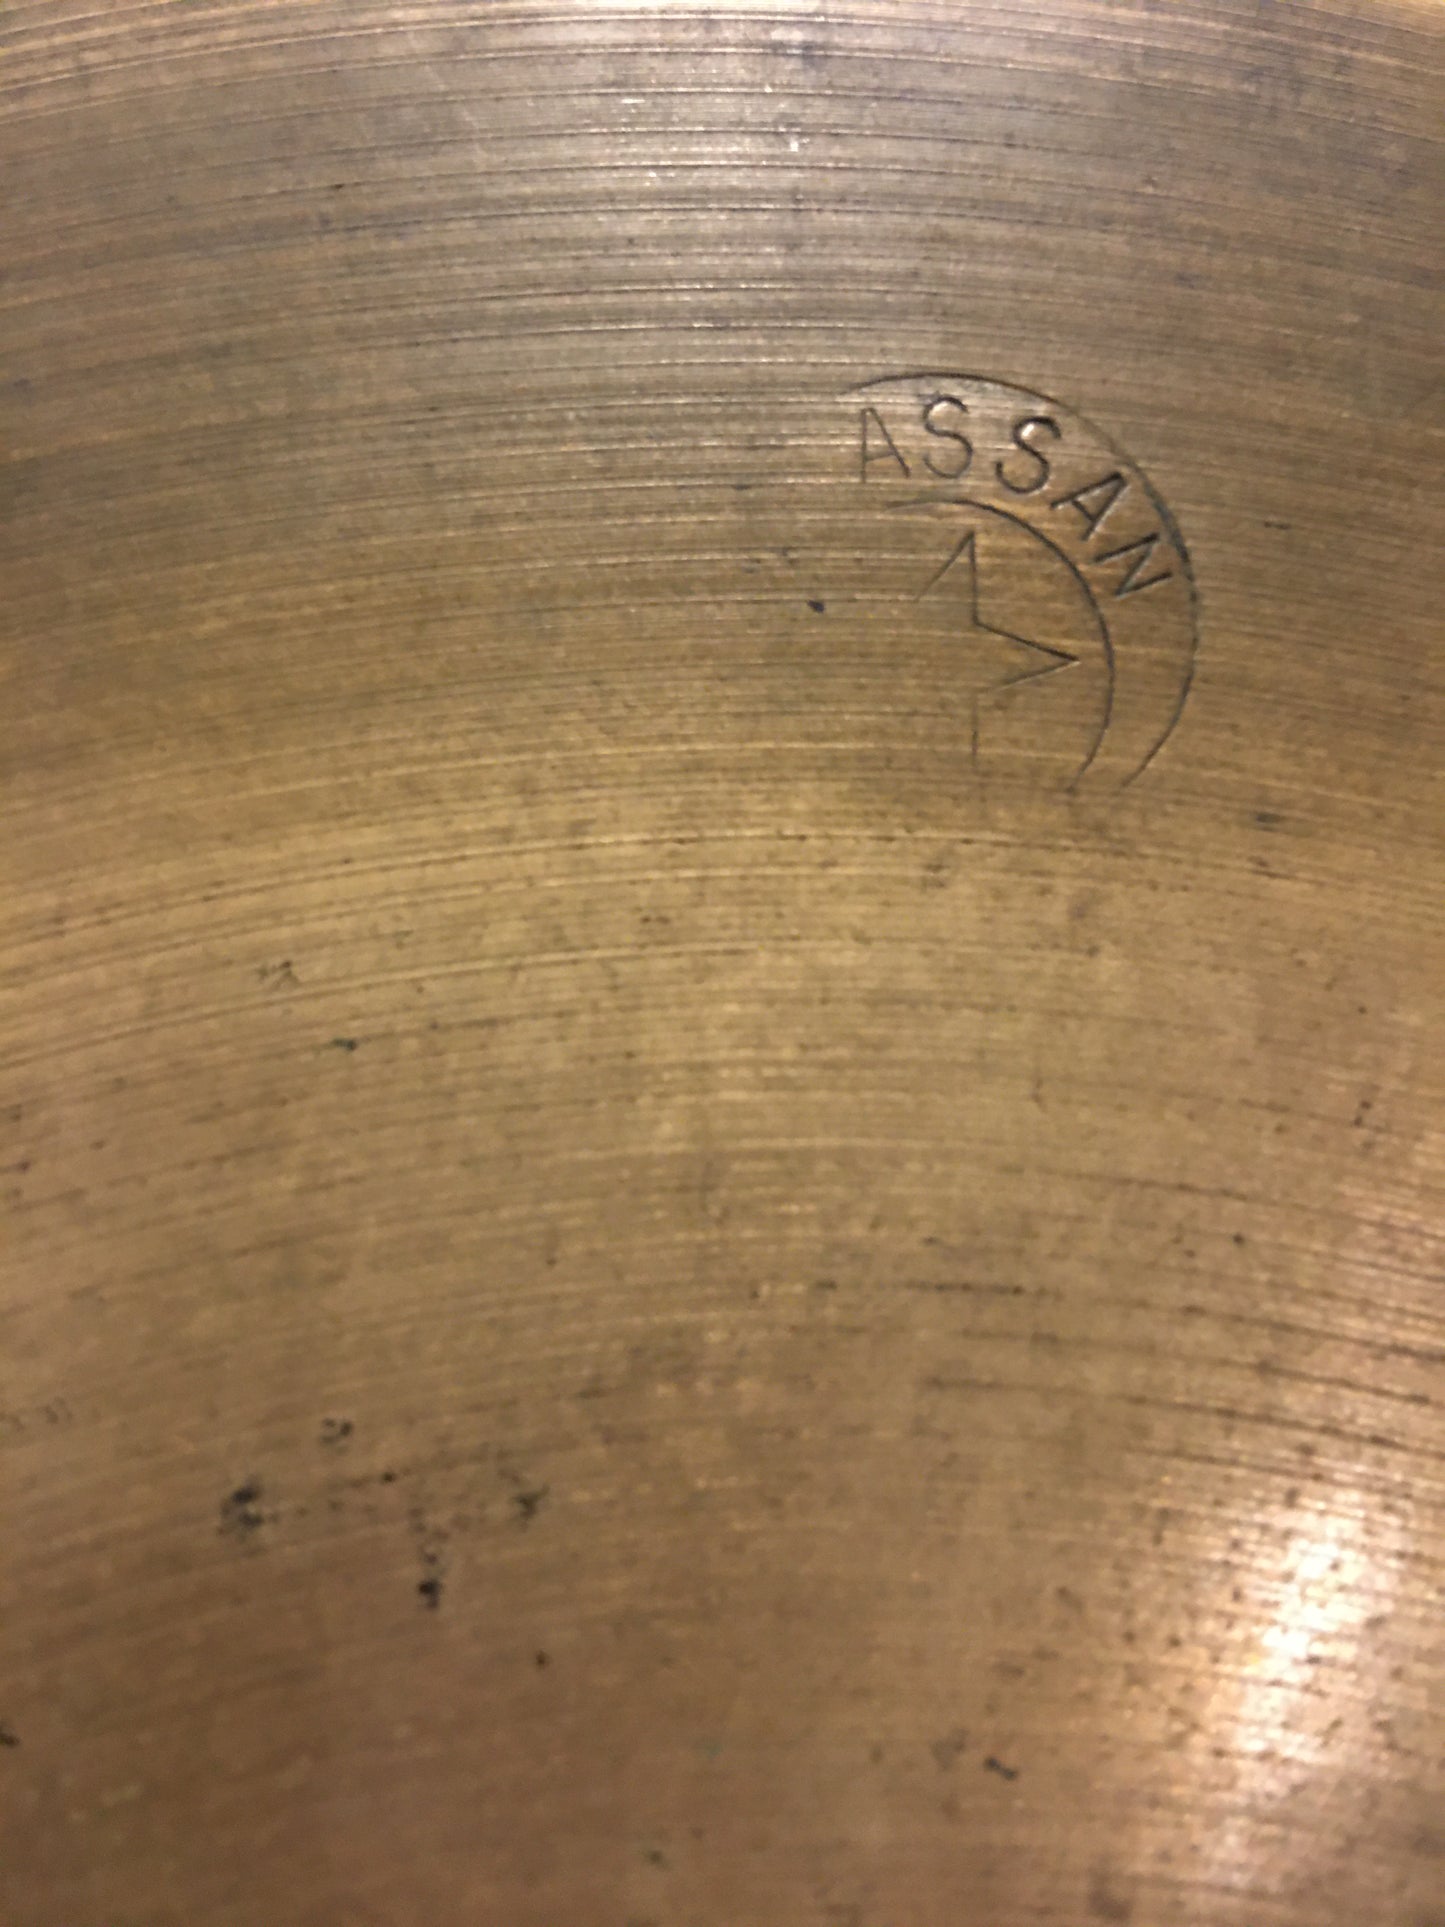 11" Vintage Kassan Made in Italy Splash Cymbal 302g #278